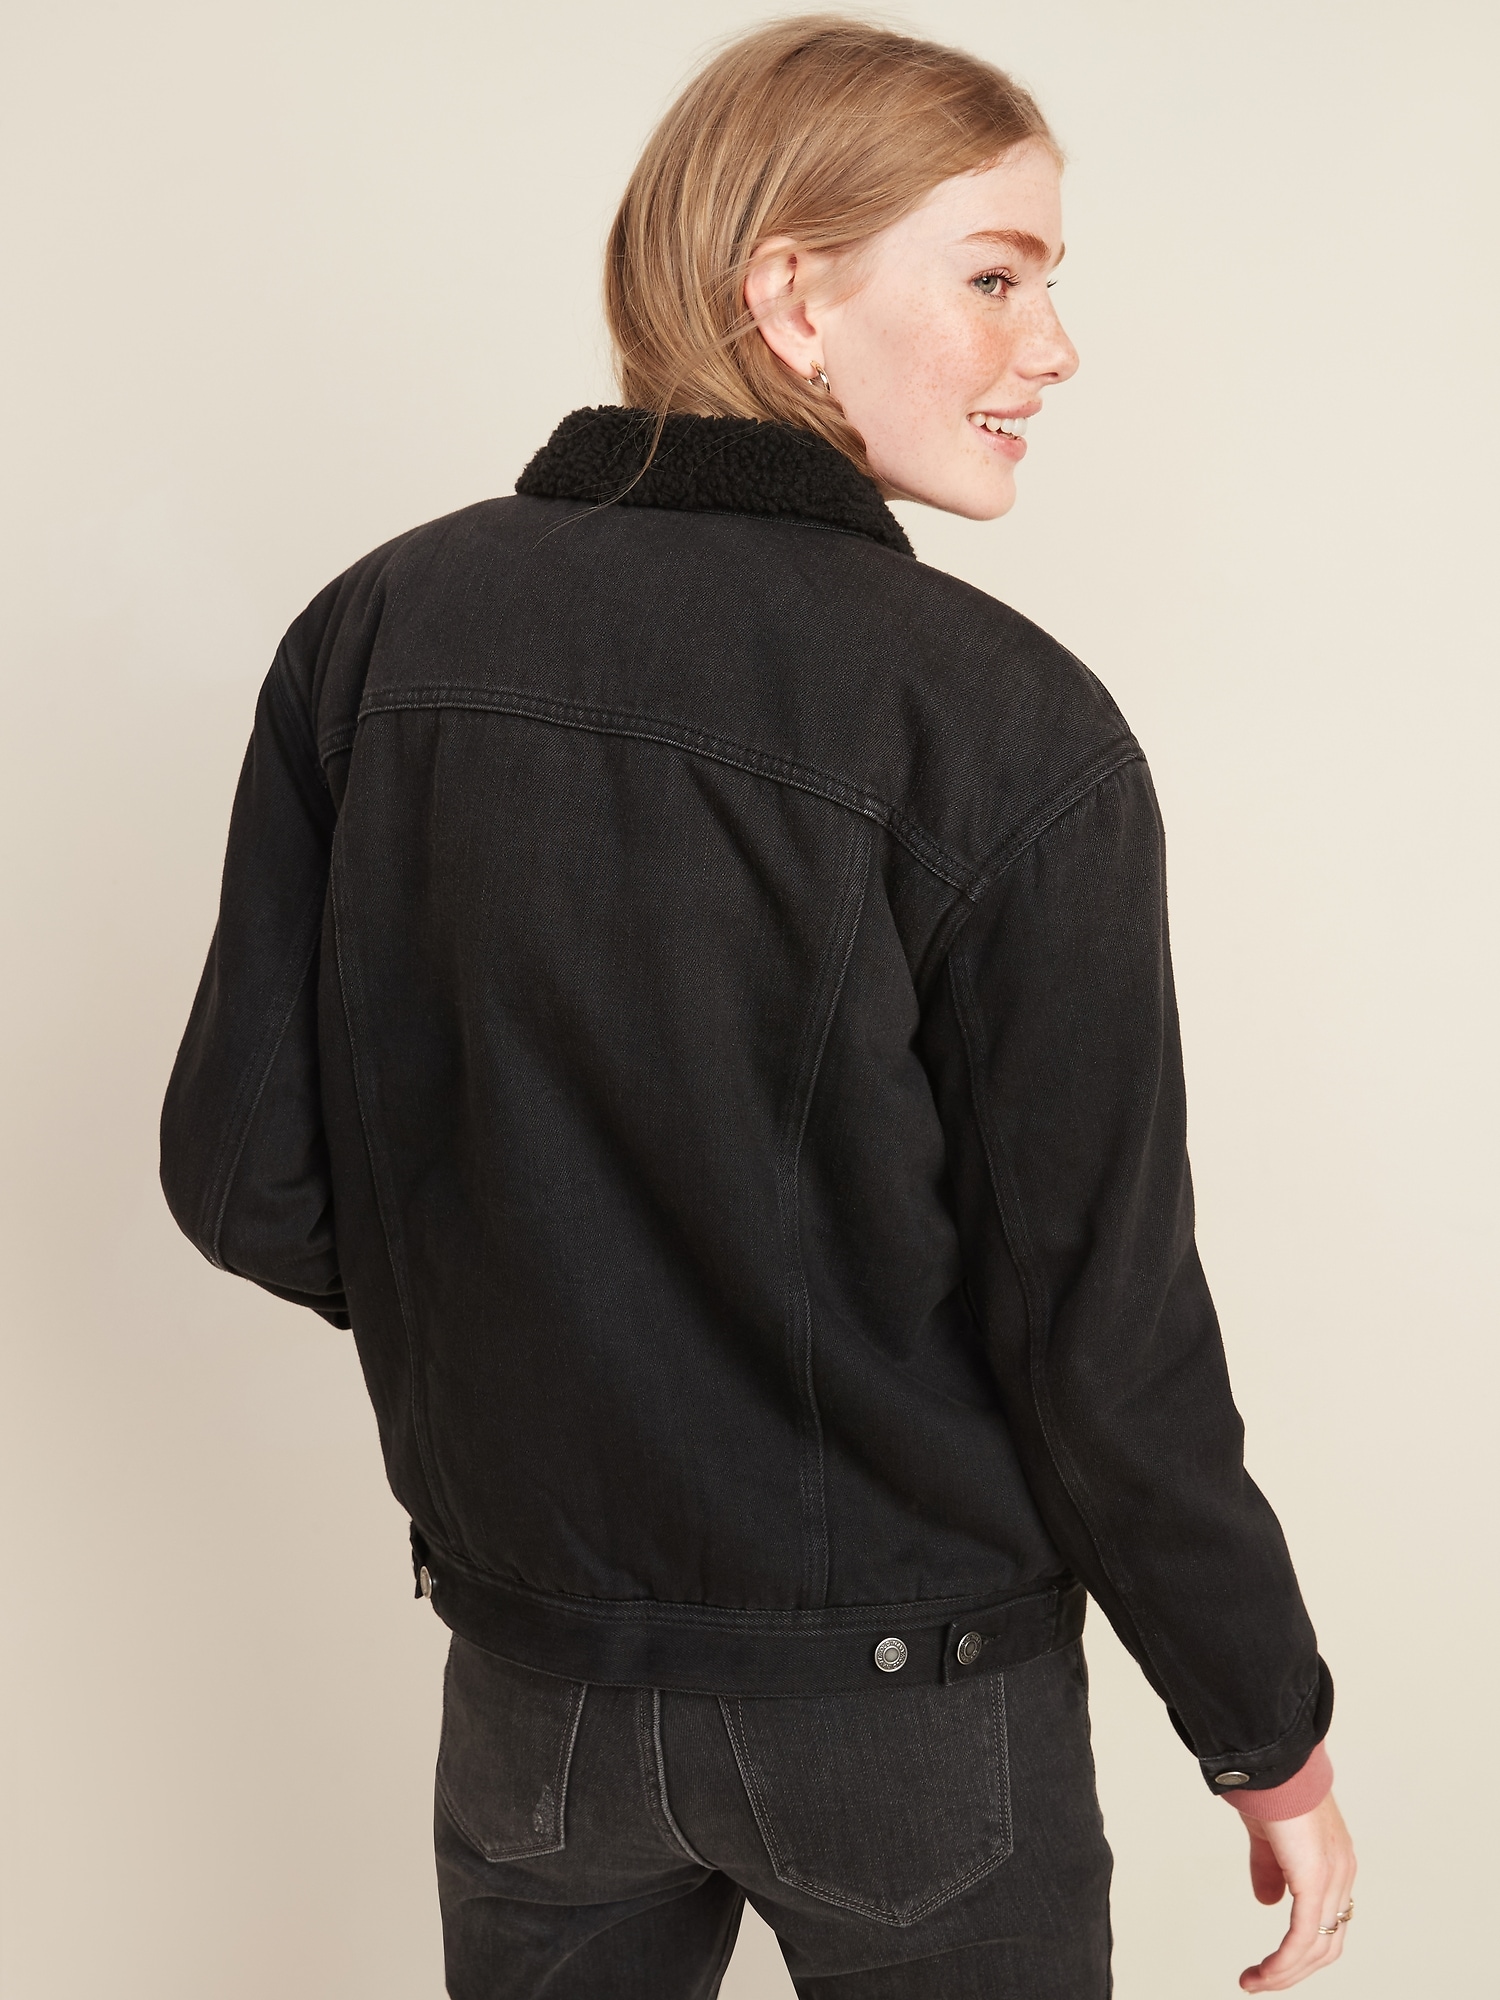 sherpa lined black denim jacket womens